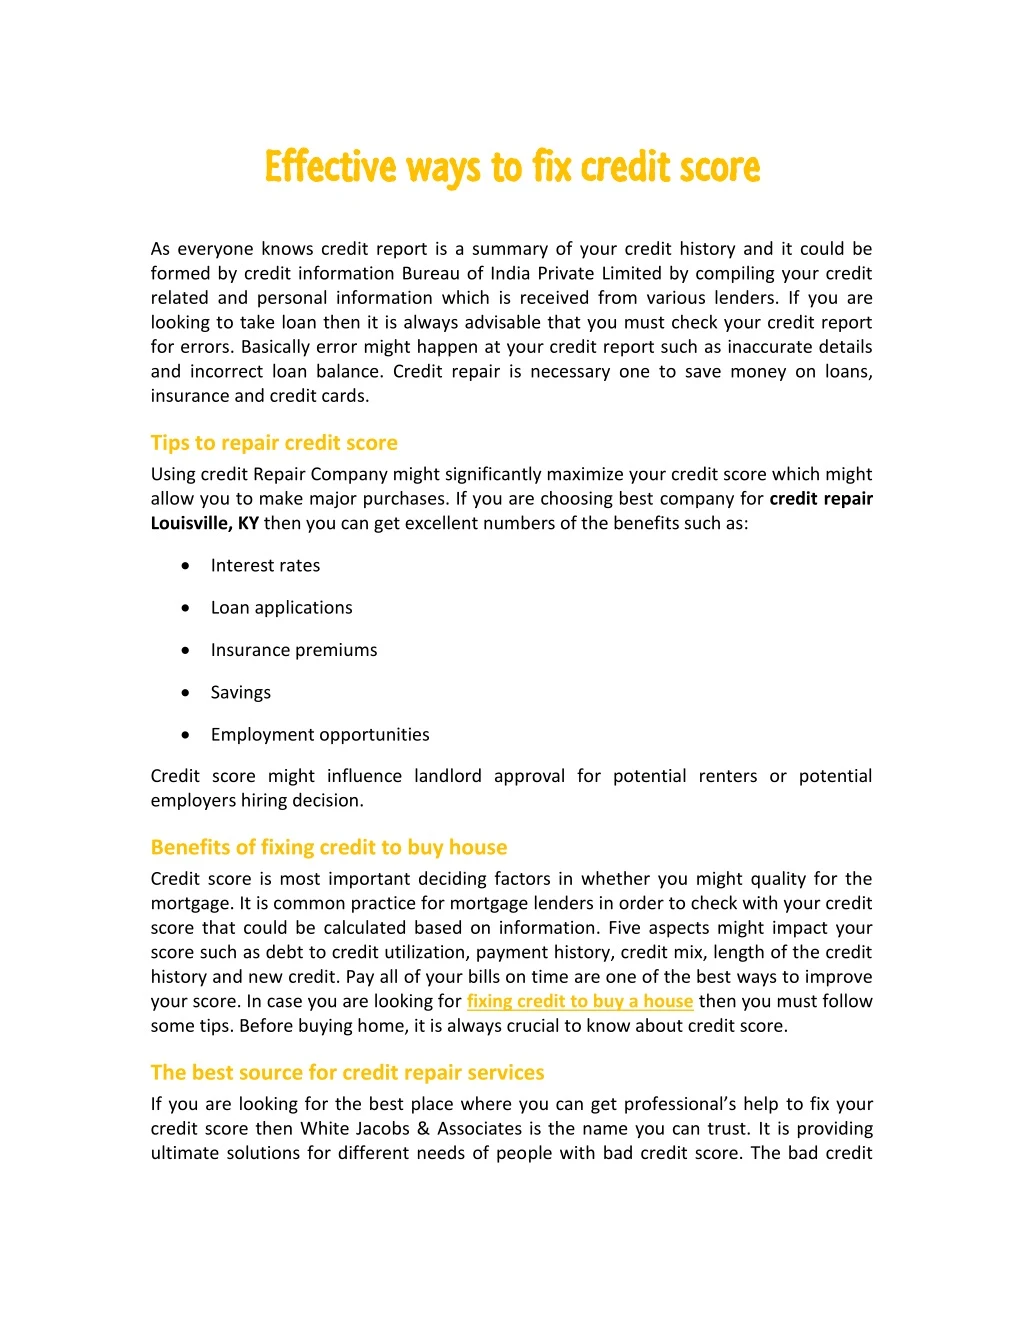 effective ways to fix credit score effective ways